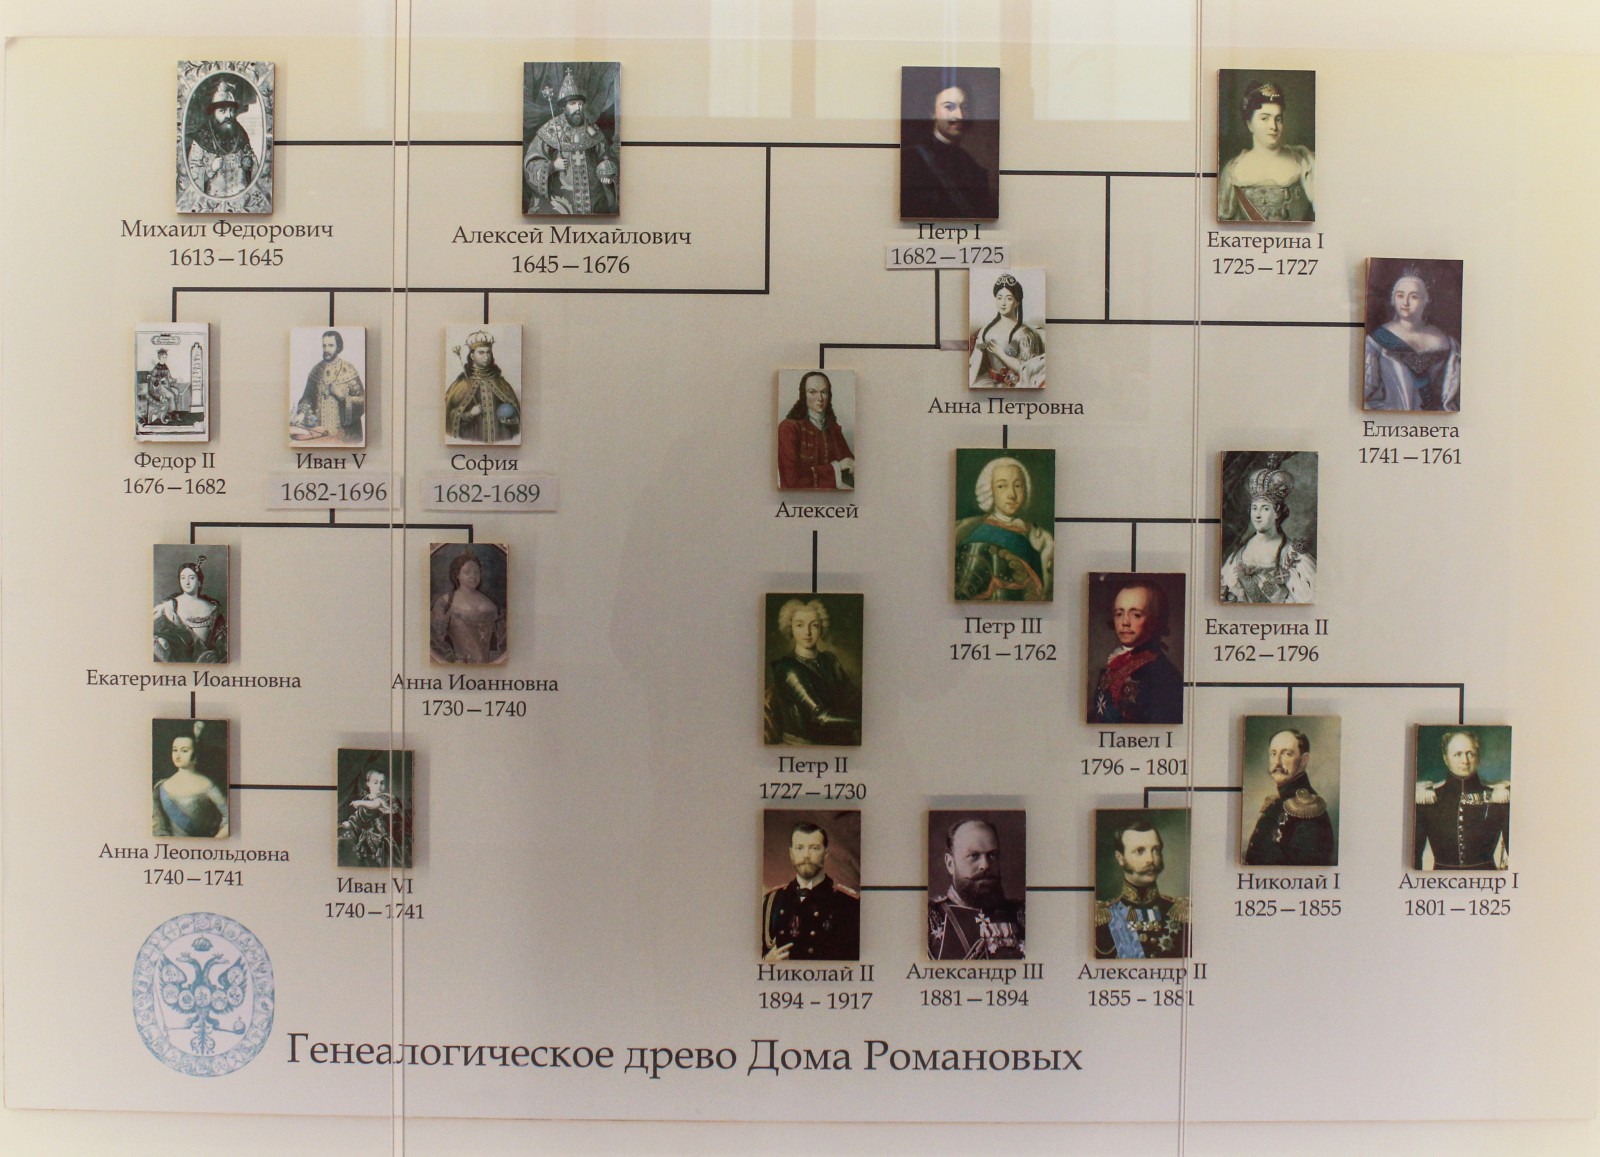 Romanov dynasty